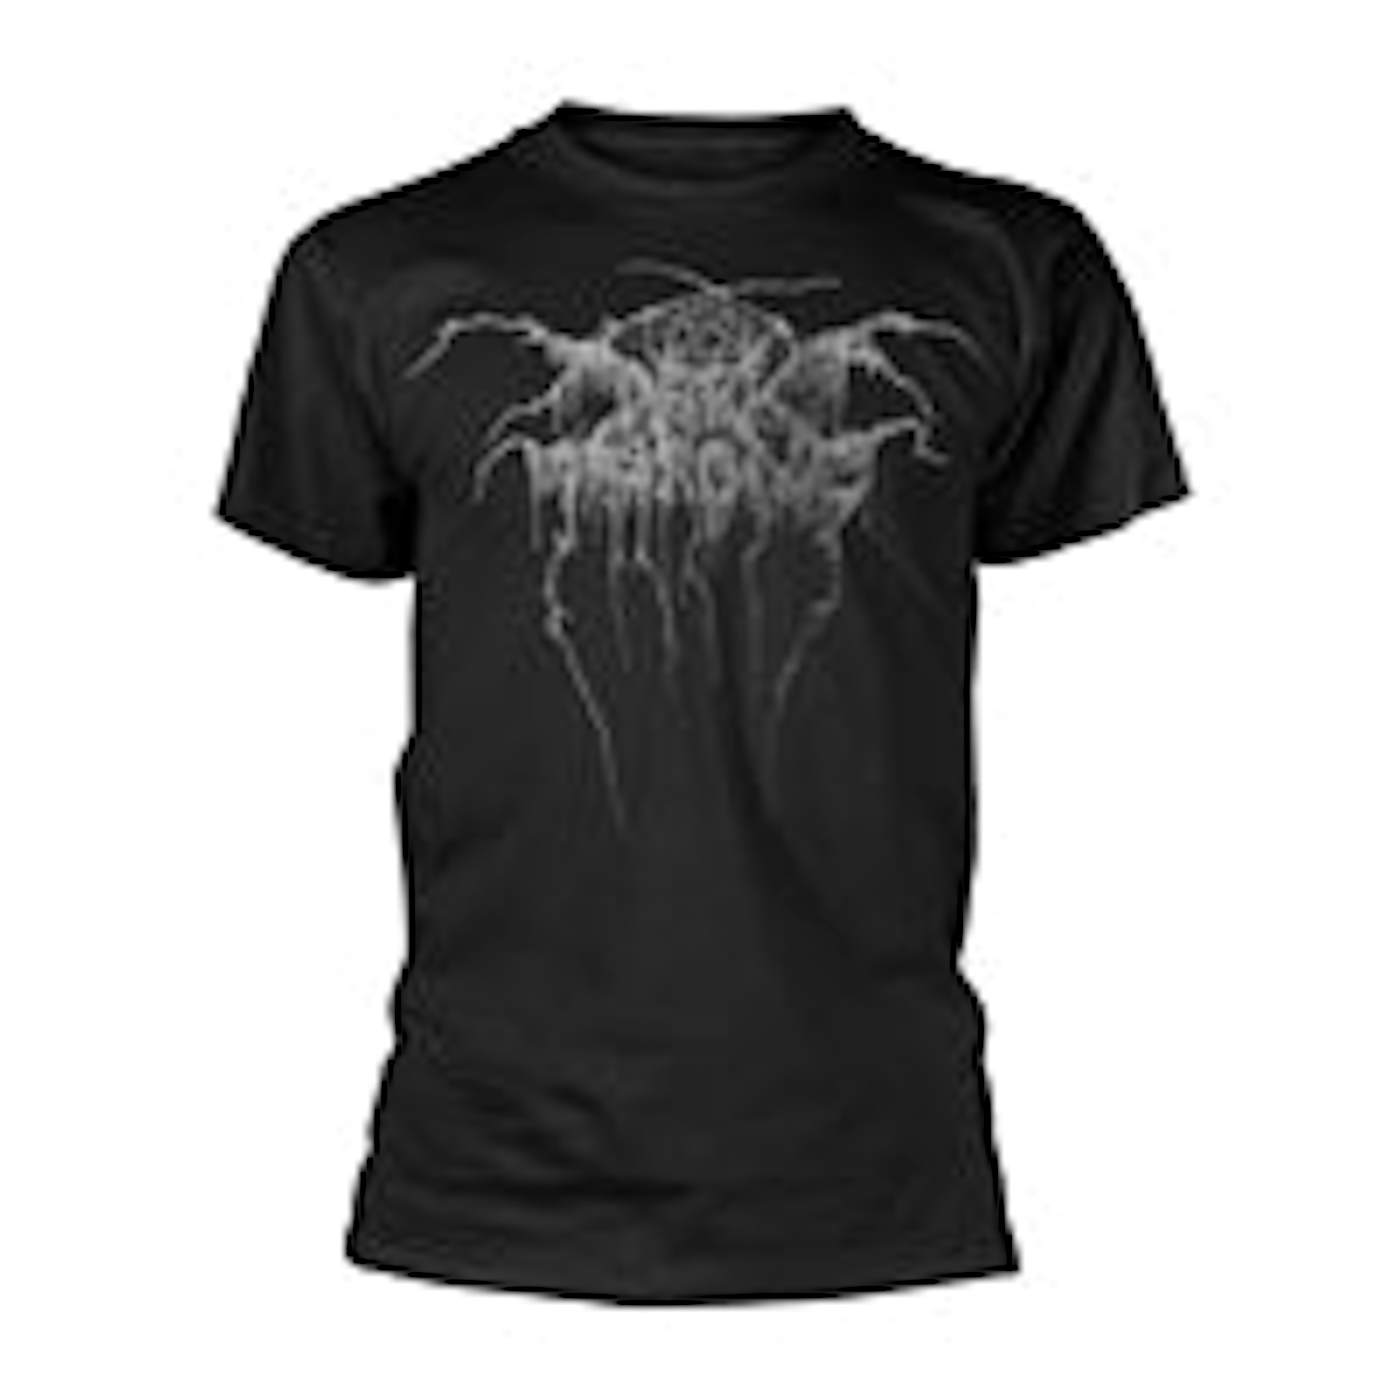 Darkthrone T Shirt - True Norwegian Black Metal